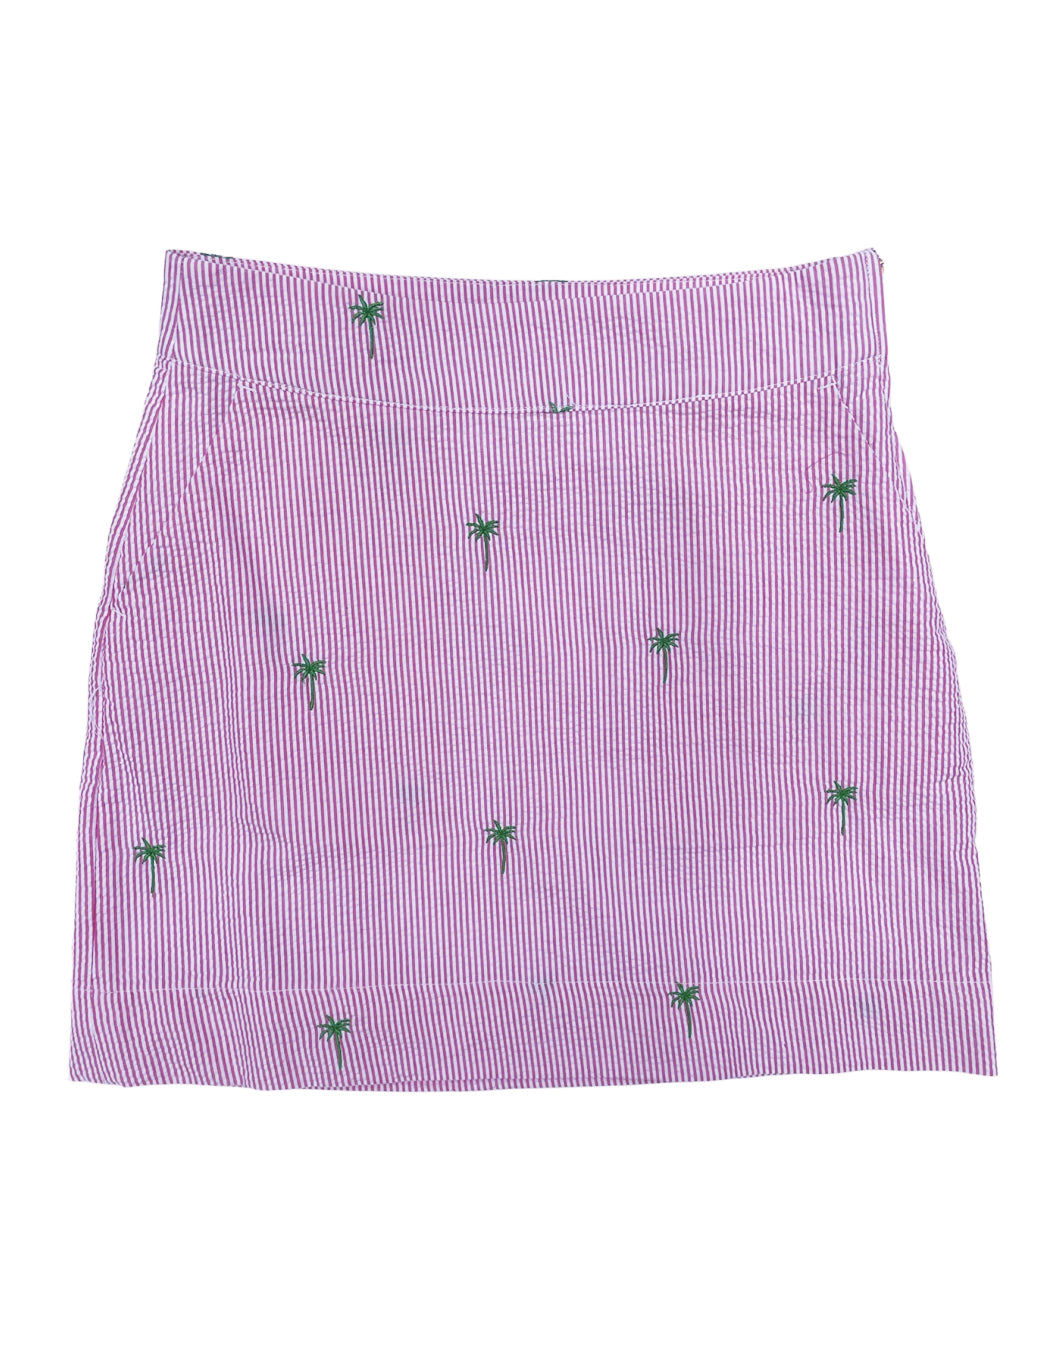 Hot Pink Seersucker Women's Skirt with Green Embroidered Palm Trees Medium